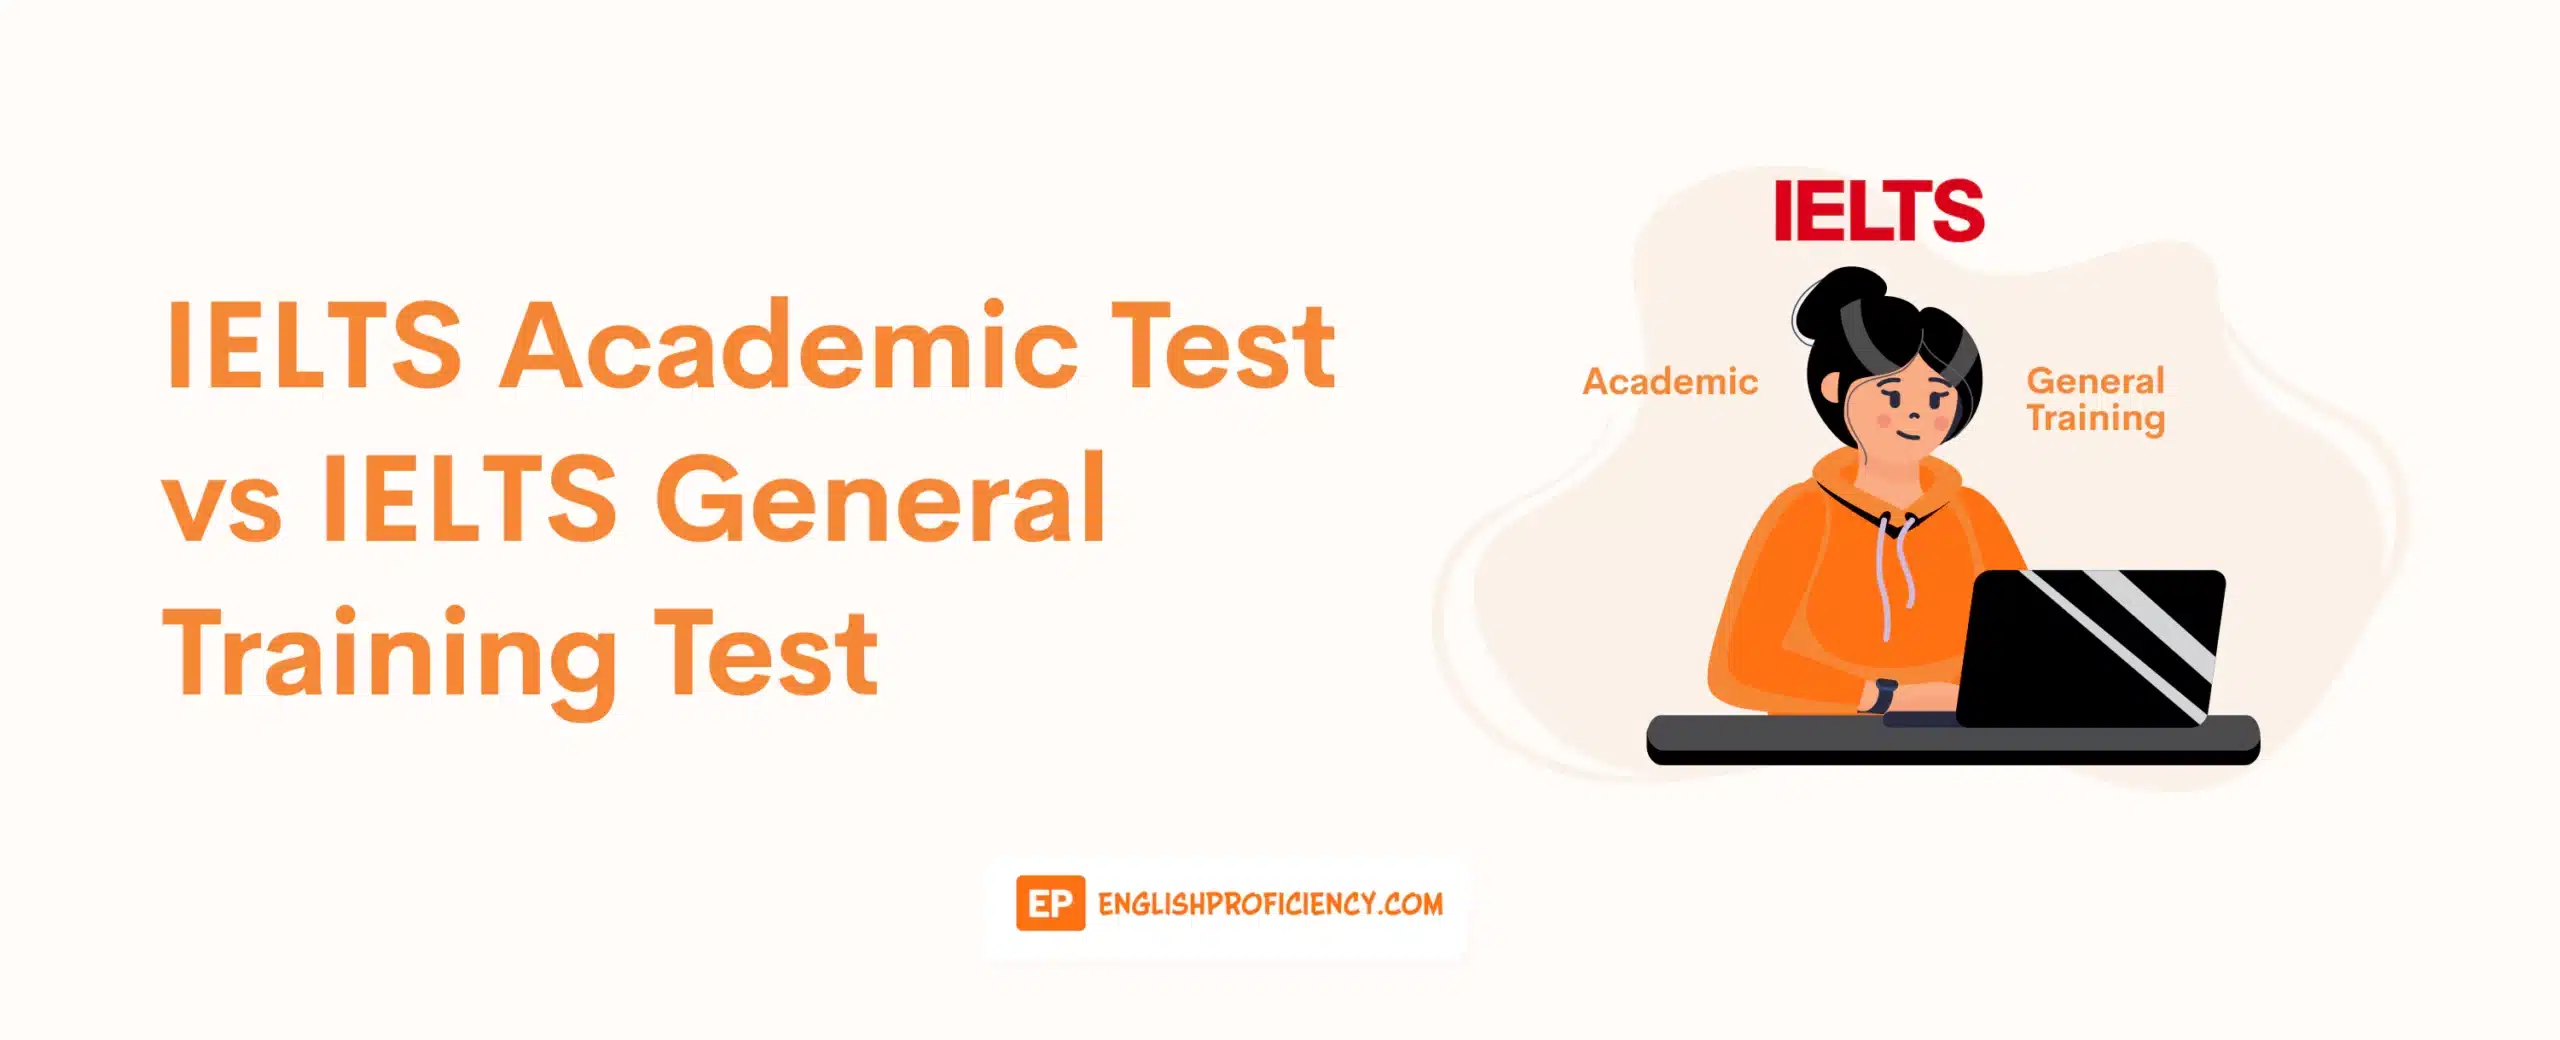 IELTS Academic vs General Training Tests